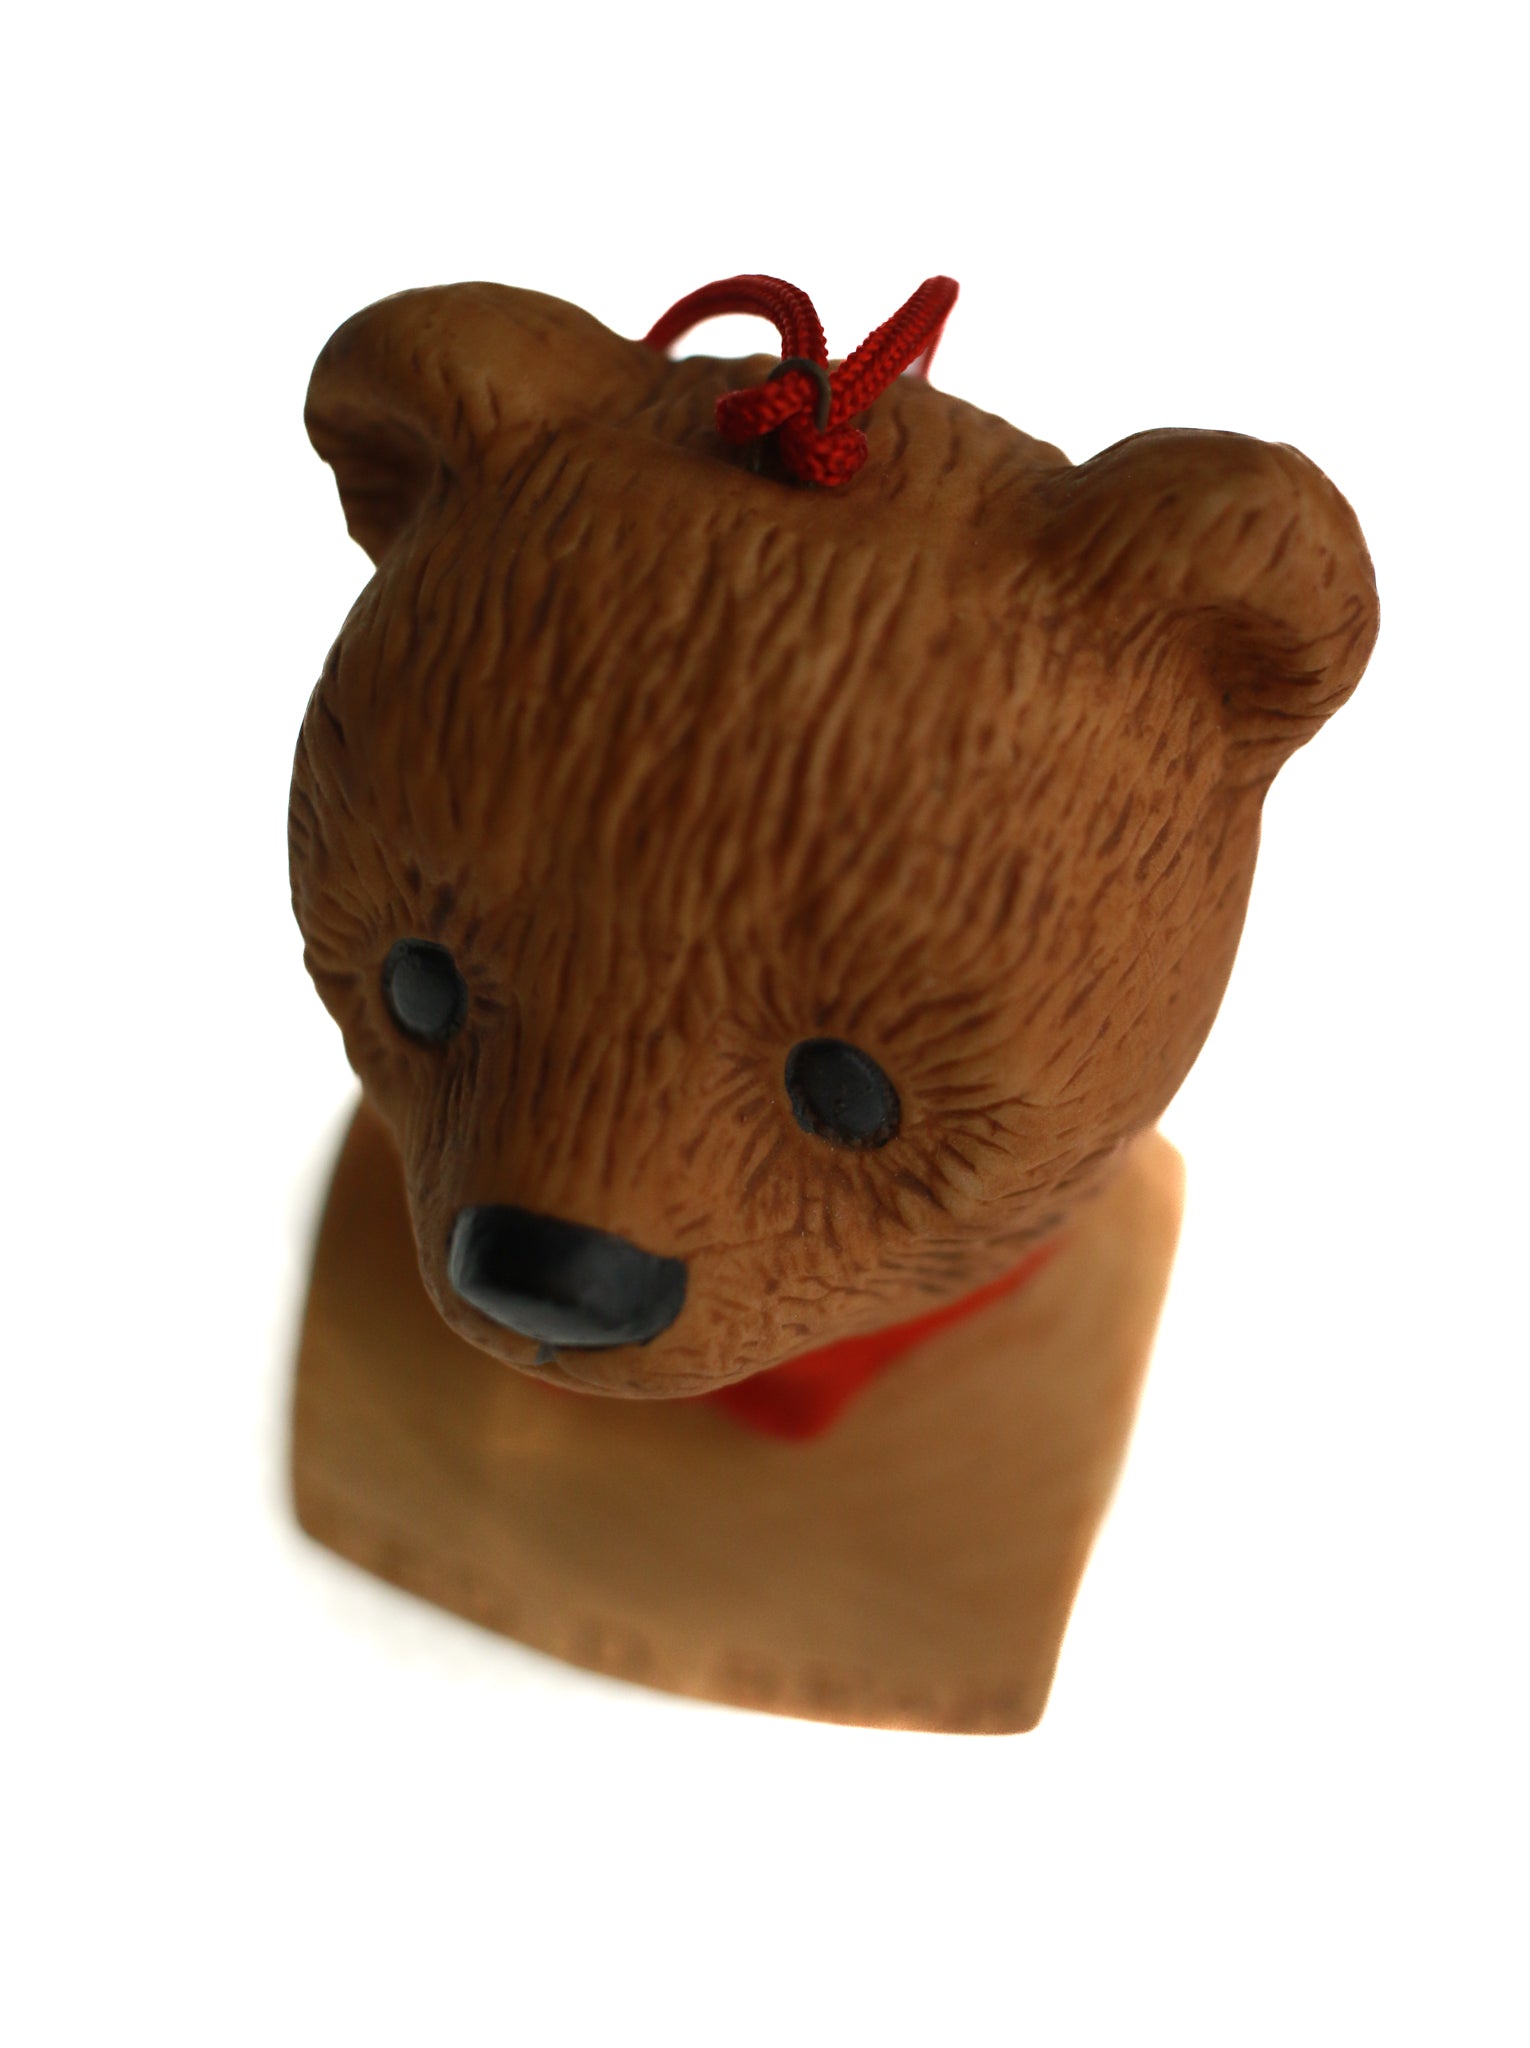 Ted D. Bear Ceramic Ornament